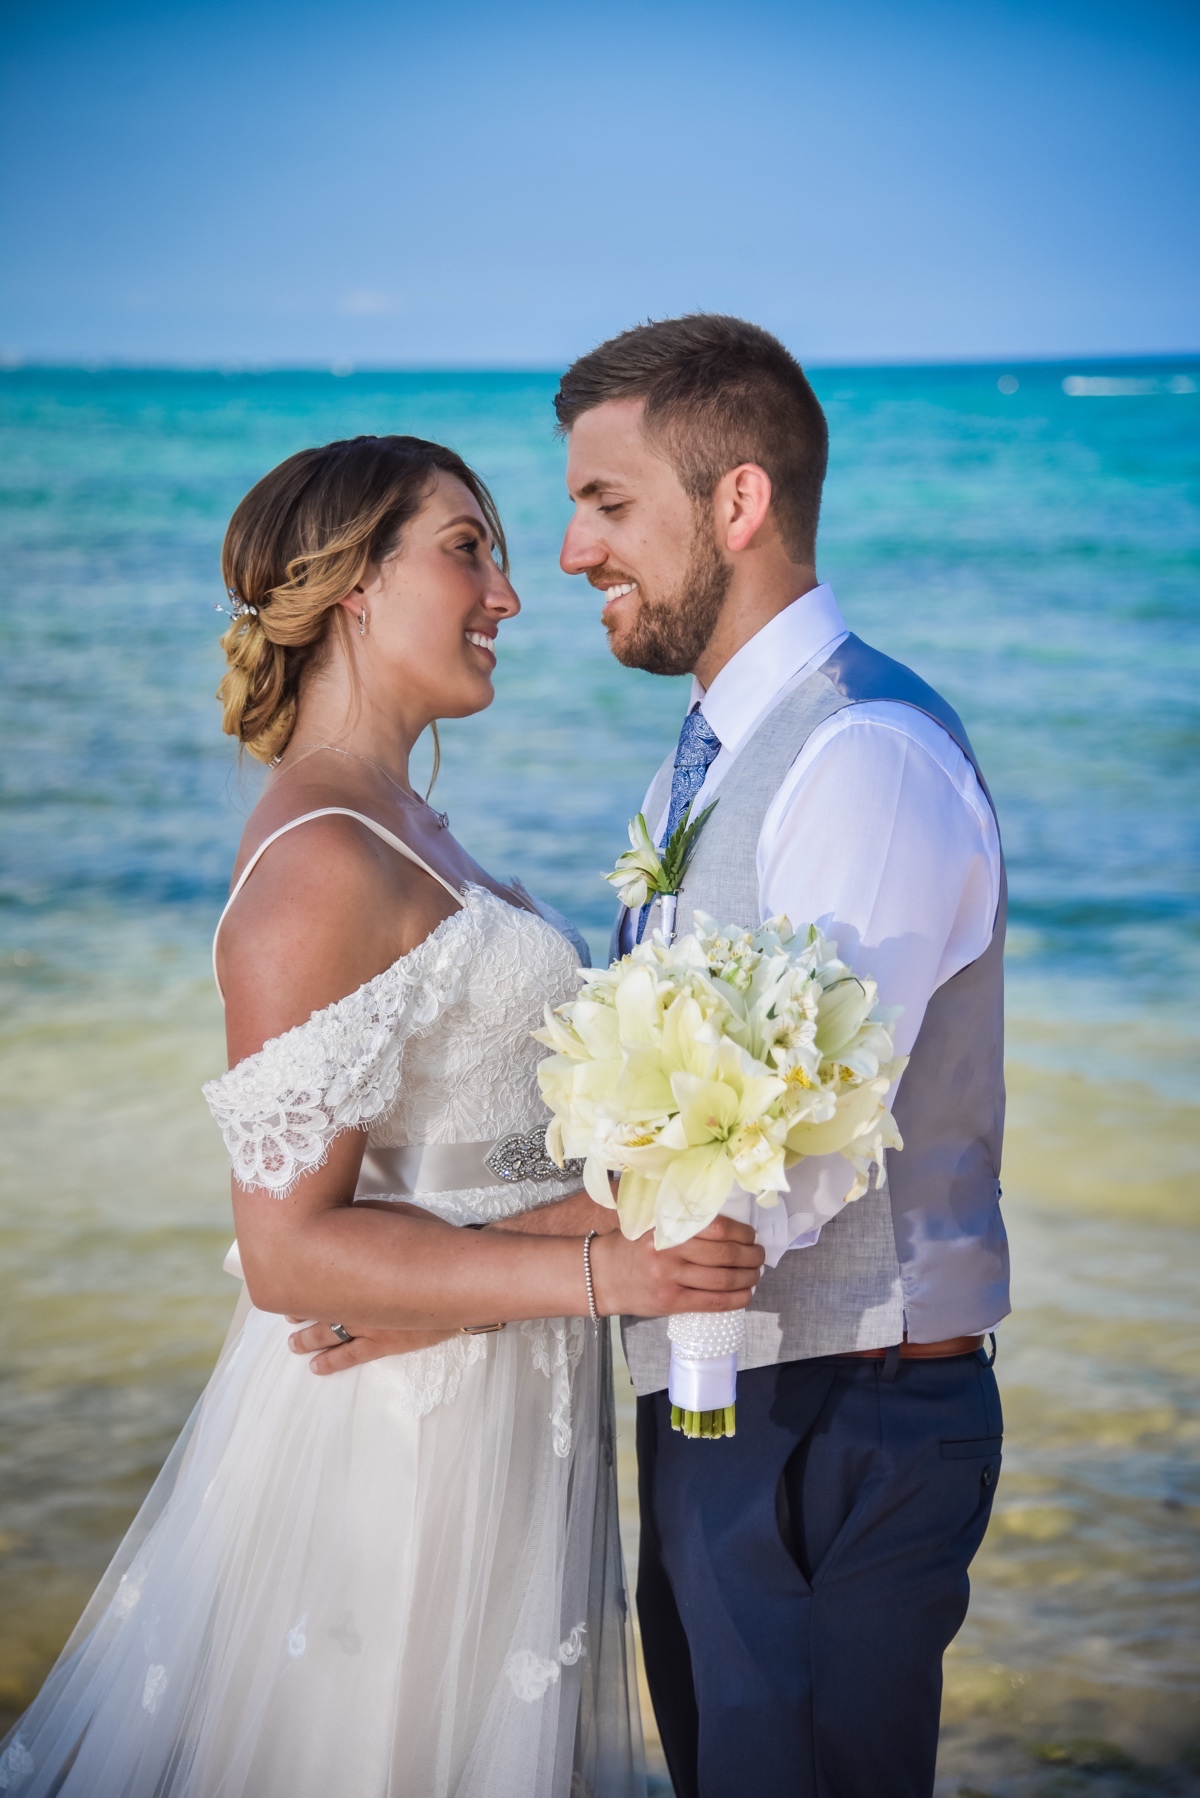 Destination Wedding at the Grand Bahia Principe Punta Cana, Dominican Republic